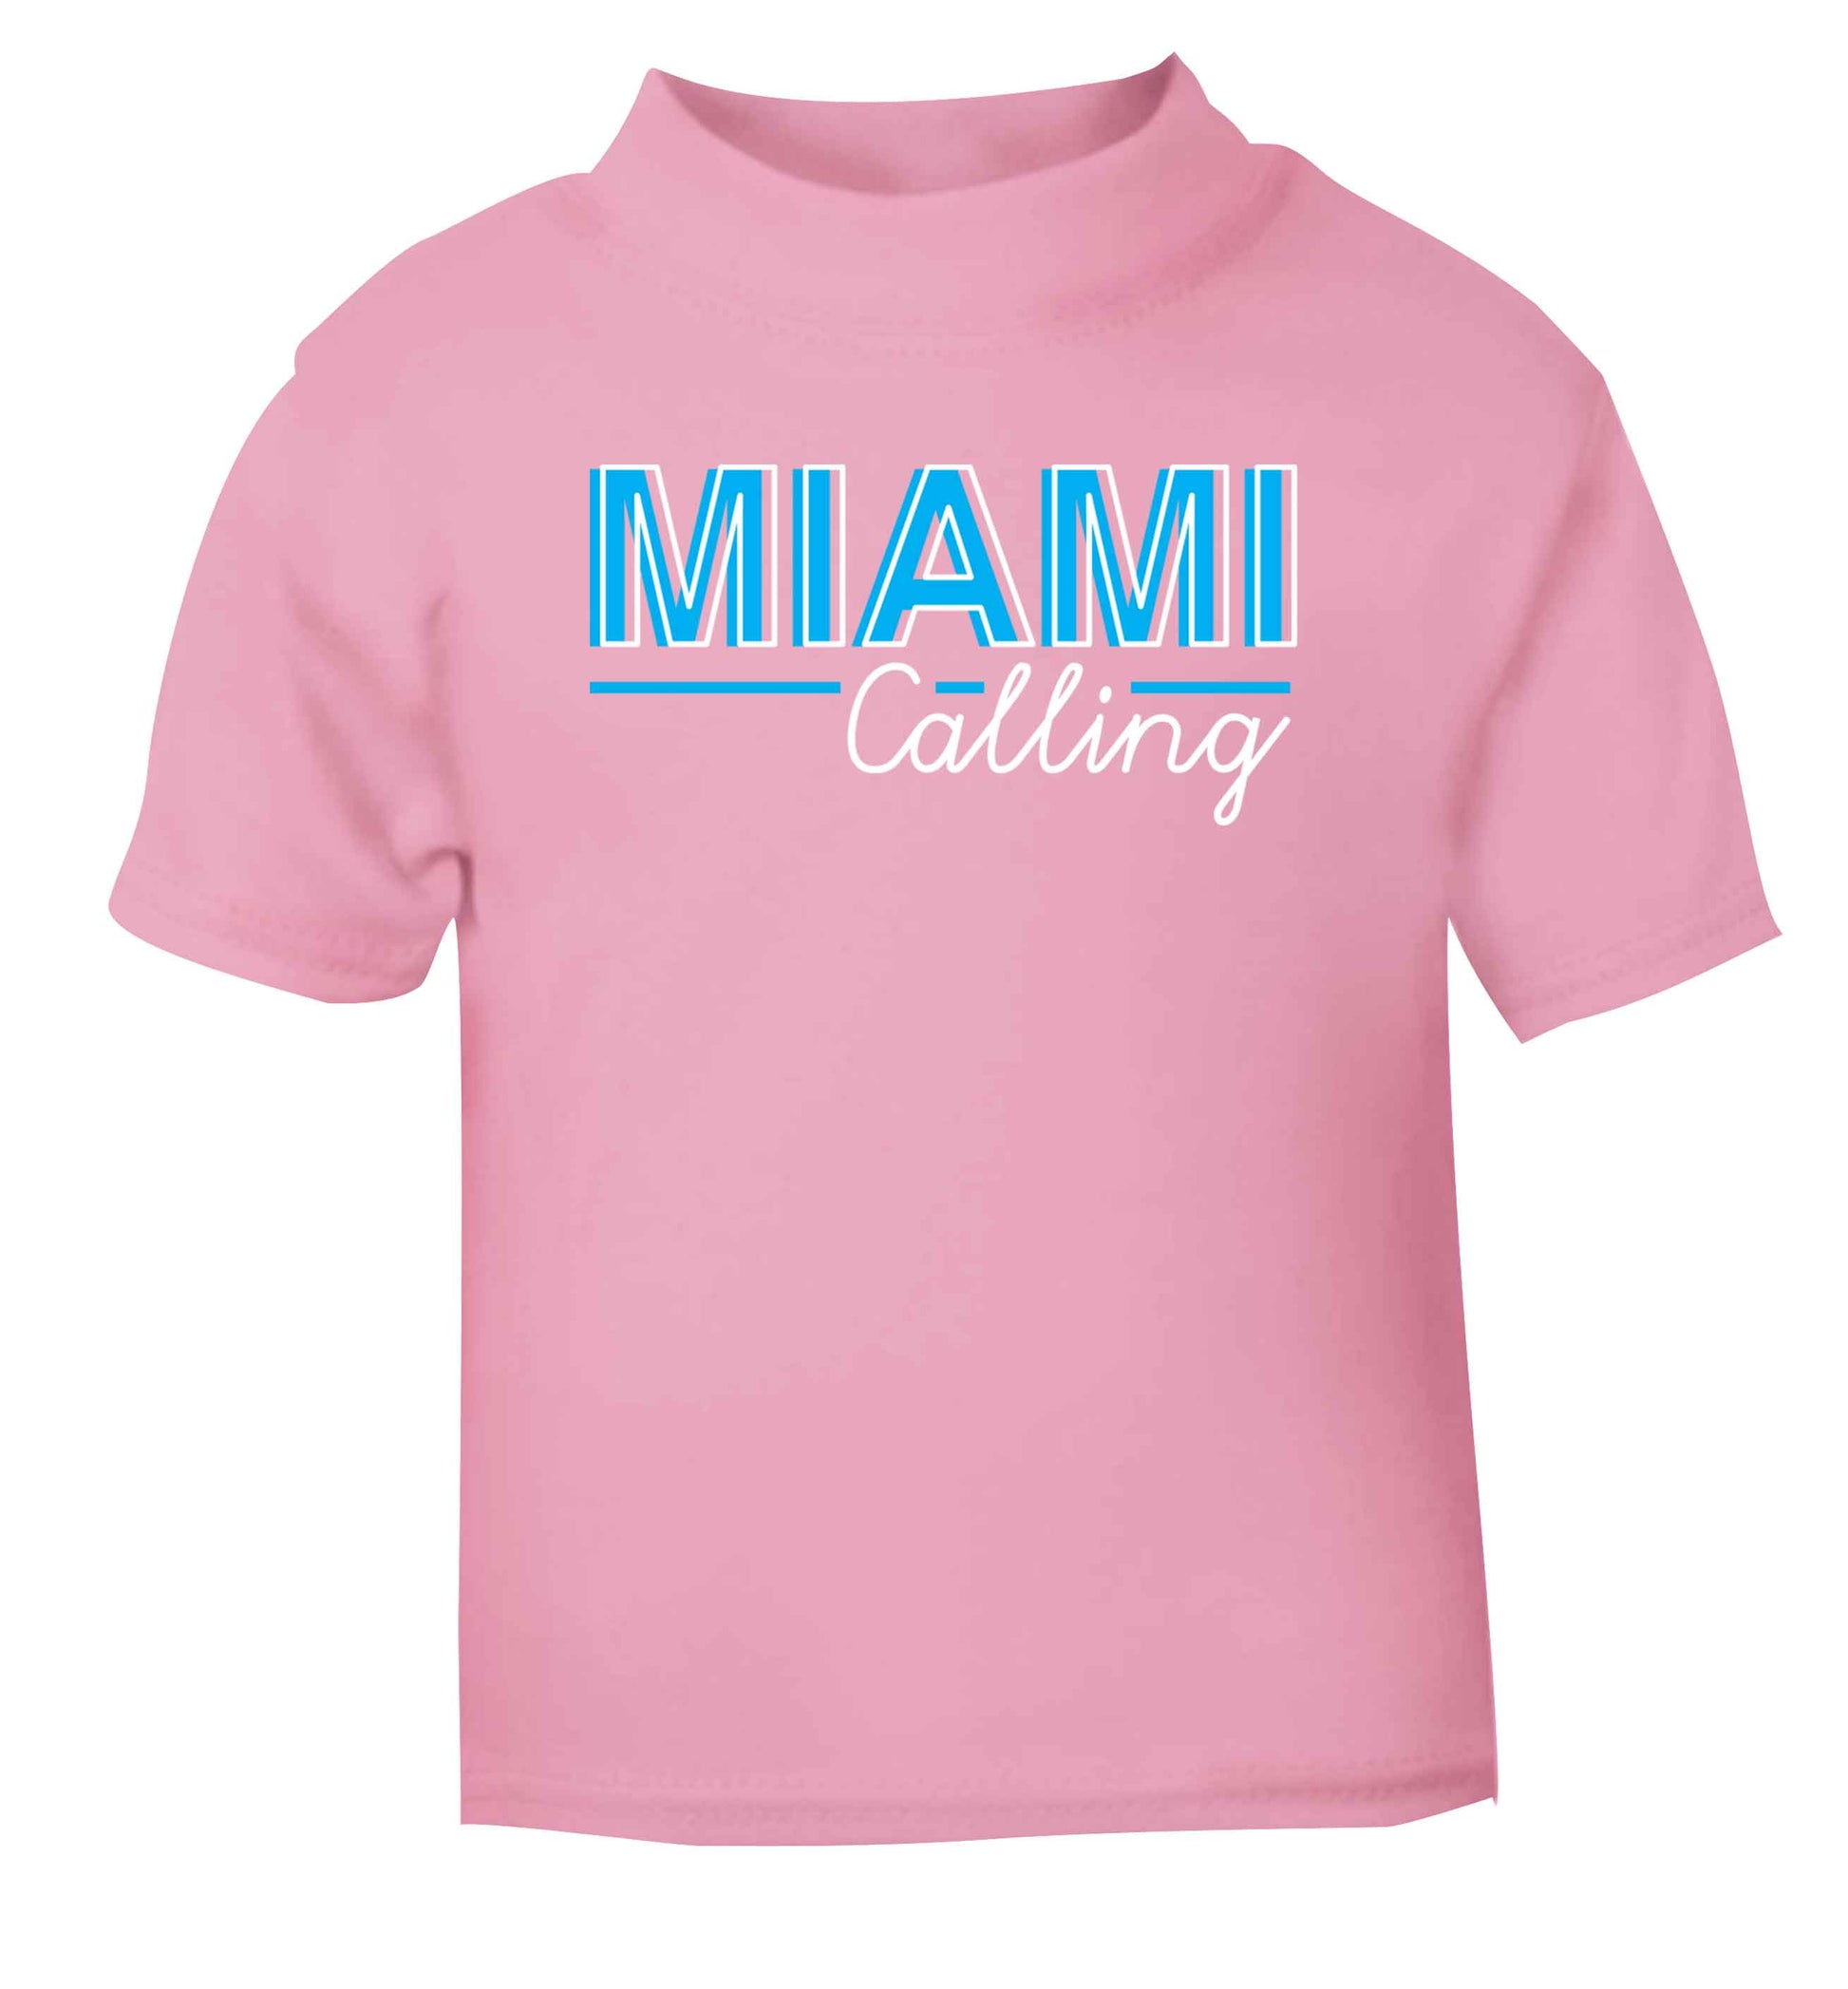 Miami calling light pink Baby Toddler Tshirt 2 Years